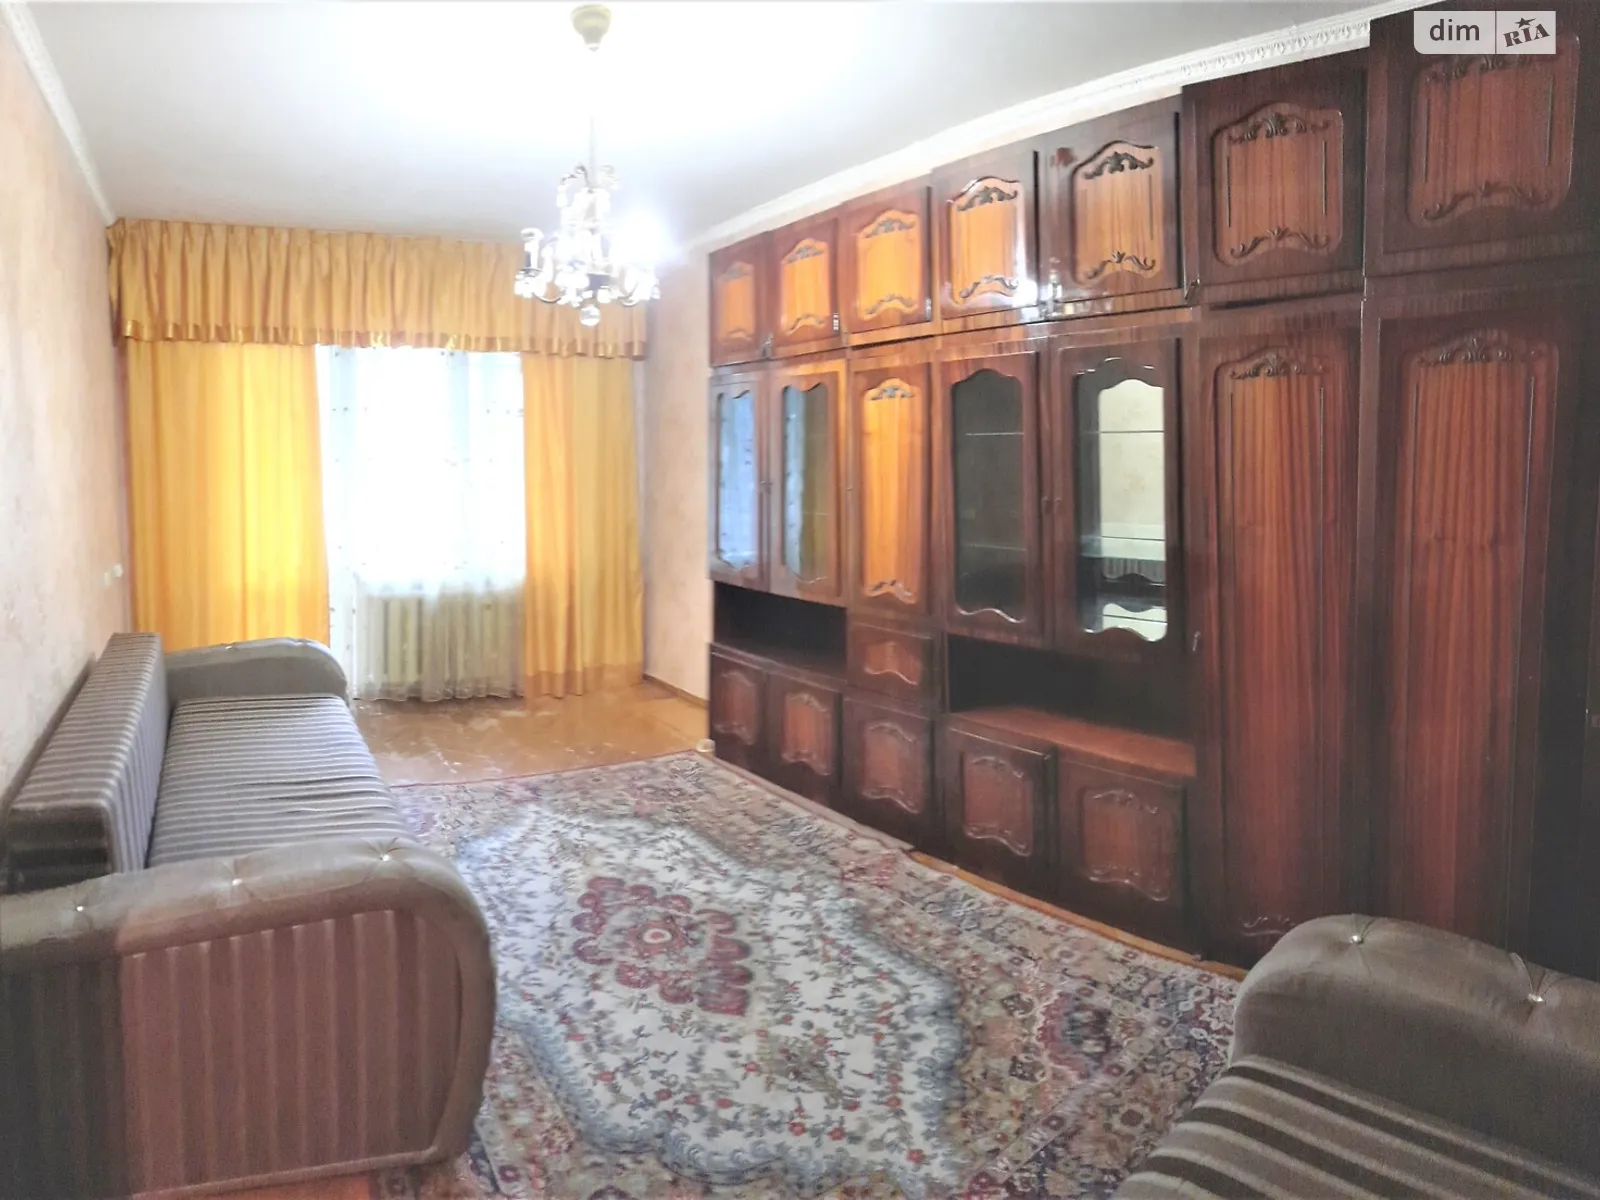 Сдается в аренду 1-комнатная квартира 34 кв. м в Одессе, ул. Академика Королева, 54 - фото 1